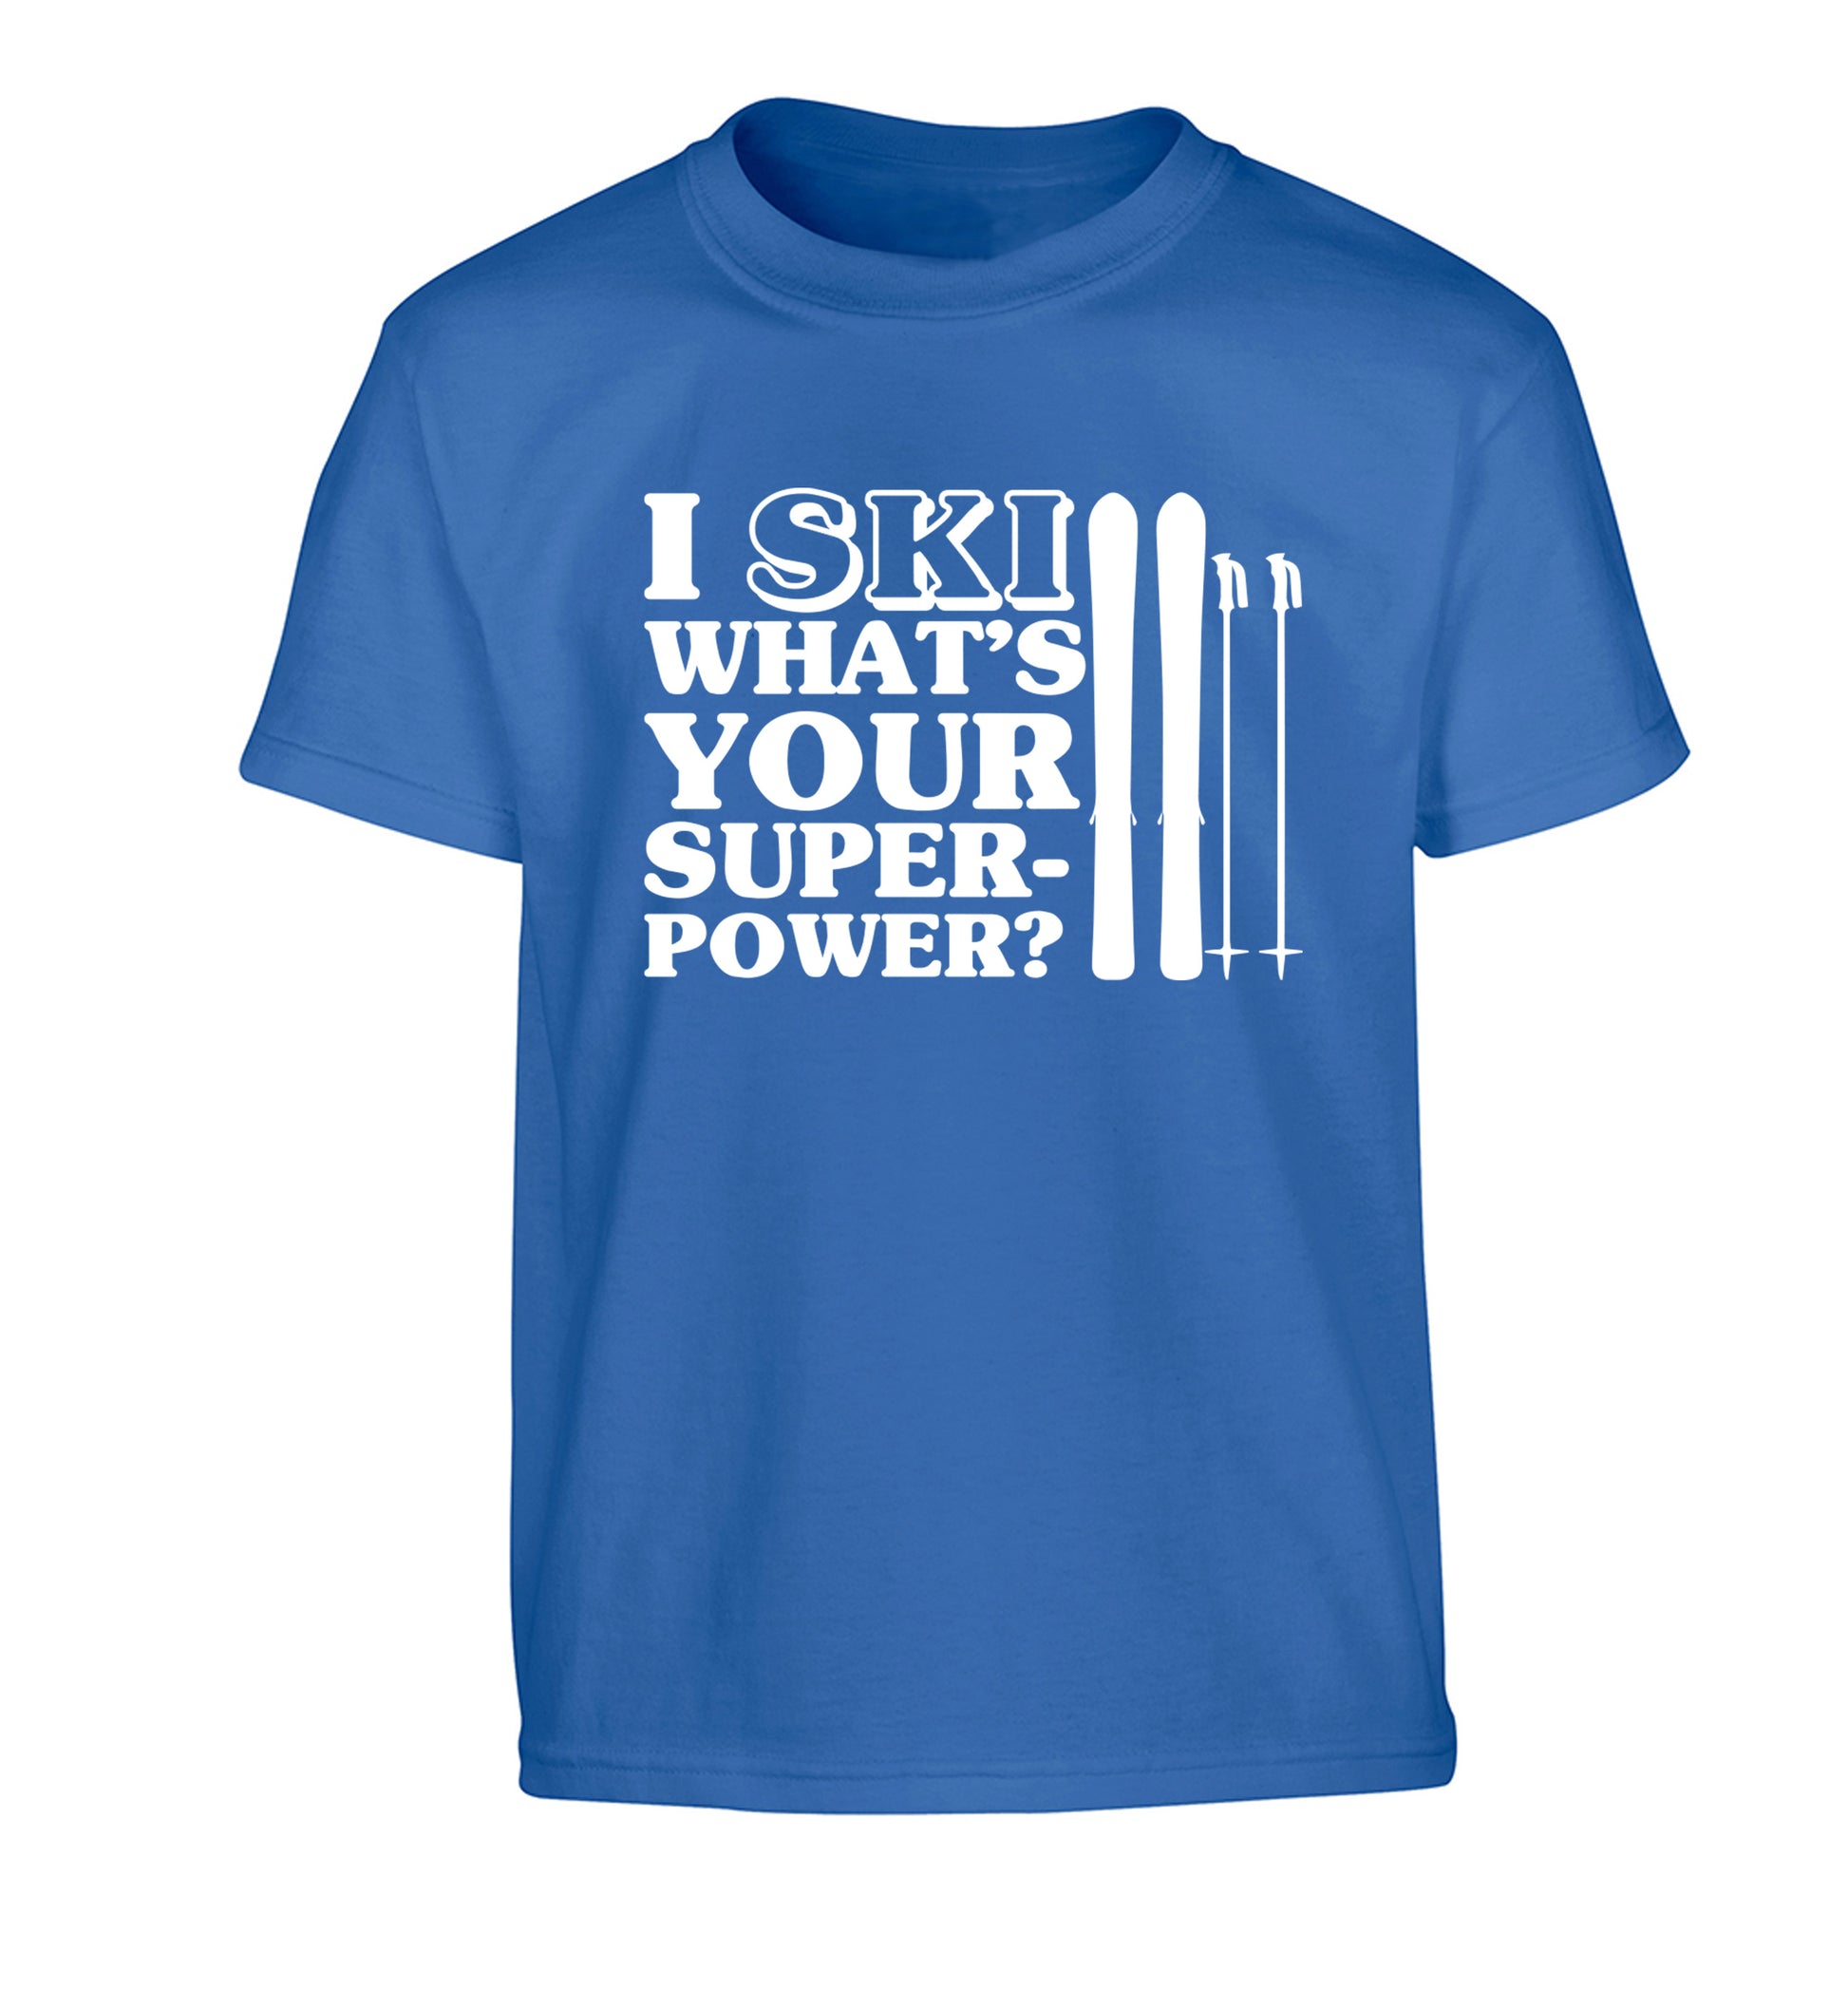 I ski what's your superpower? Children's blue Tshirt 12-14 Years